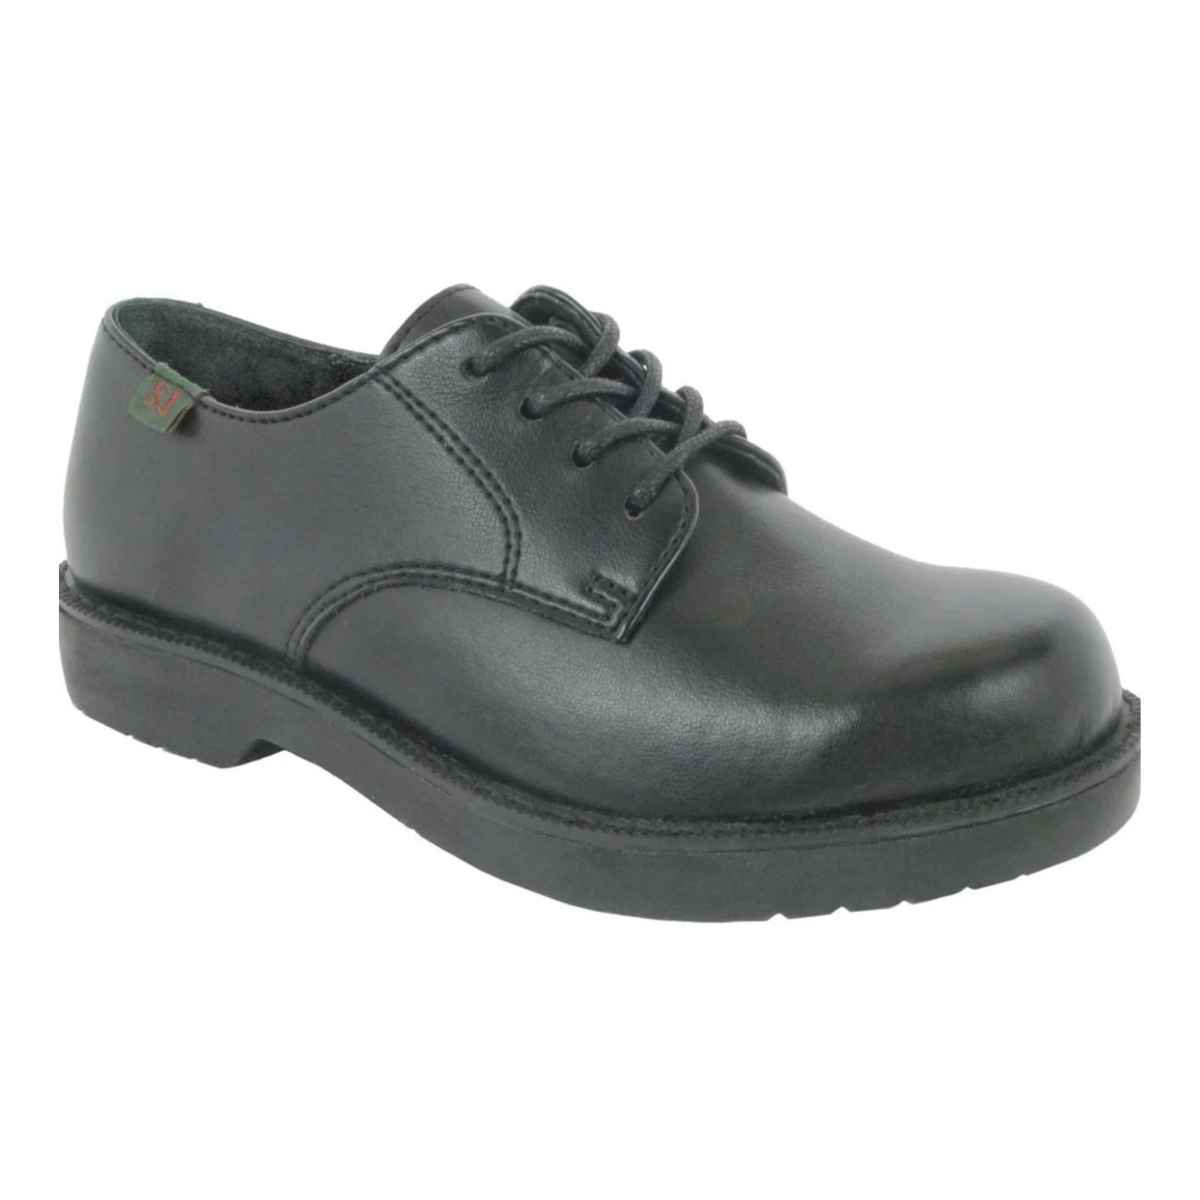 Semester Men's Black Leather Oxfords - Kids Shoe Box